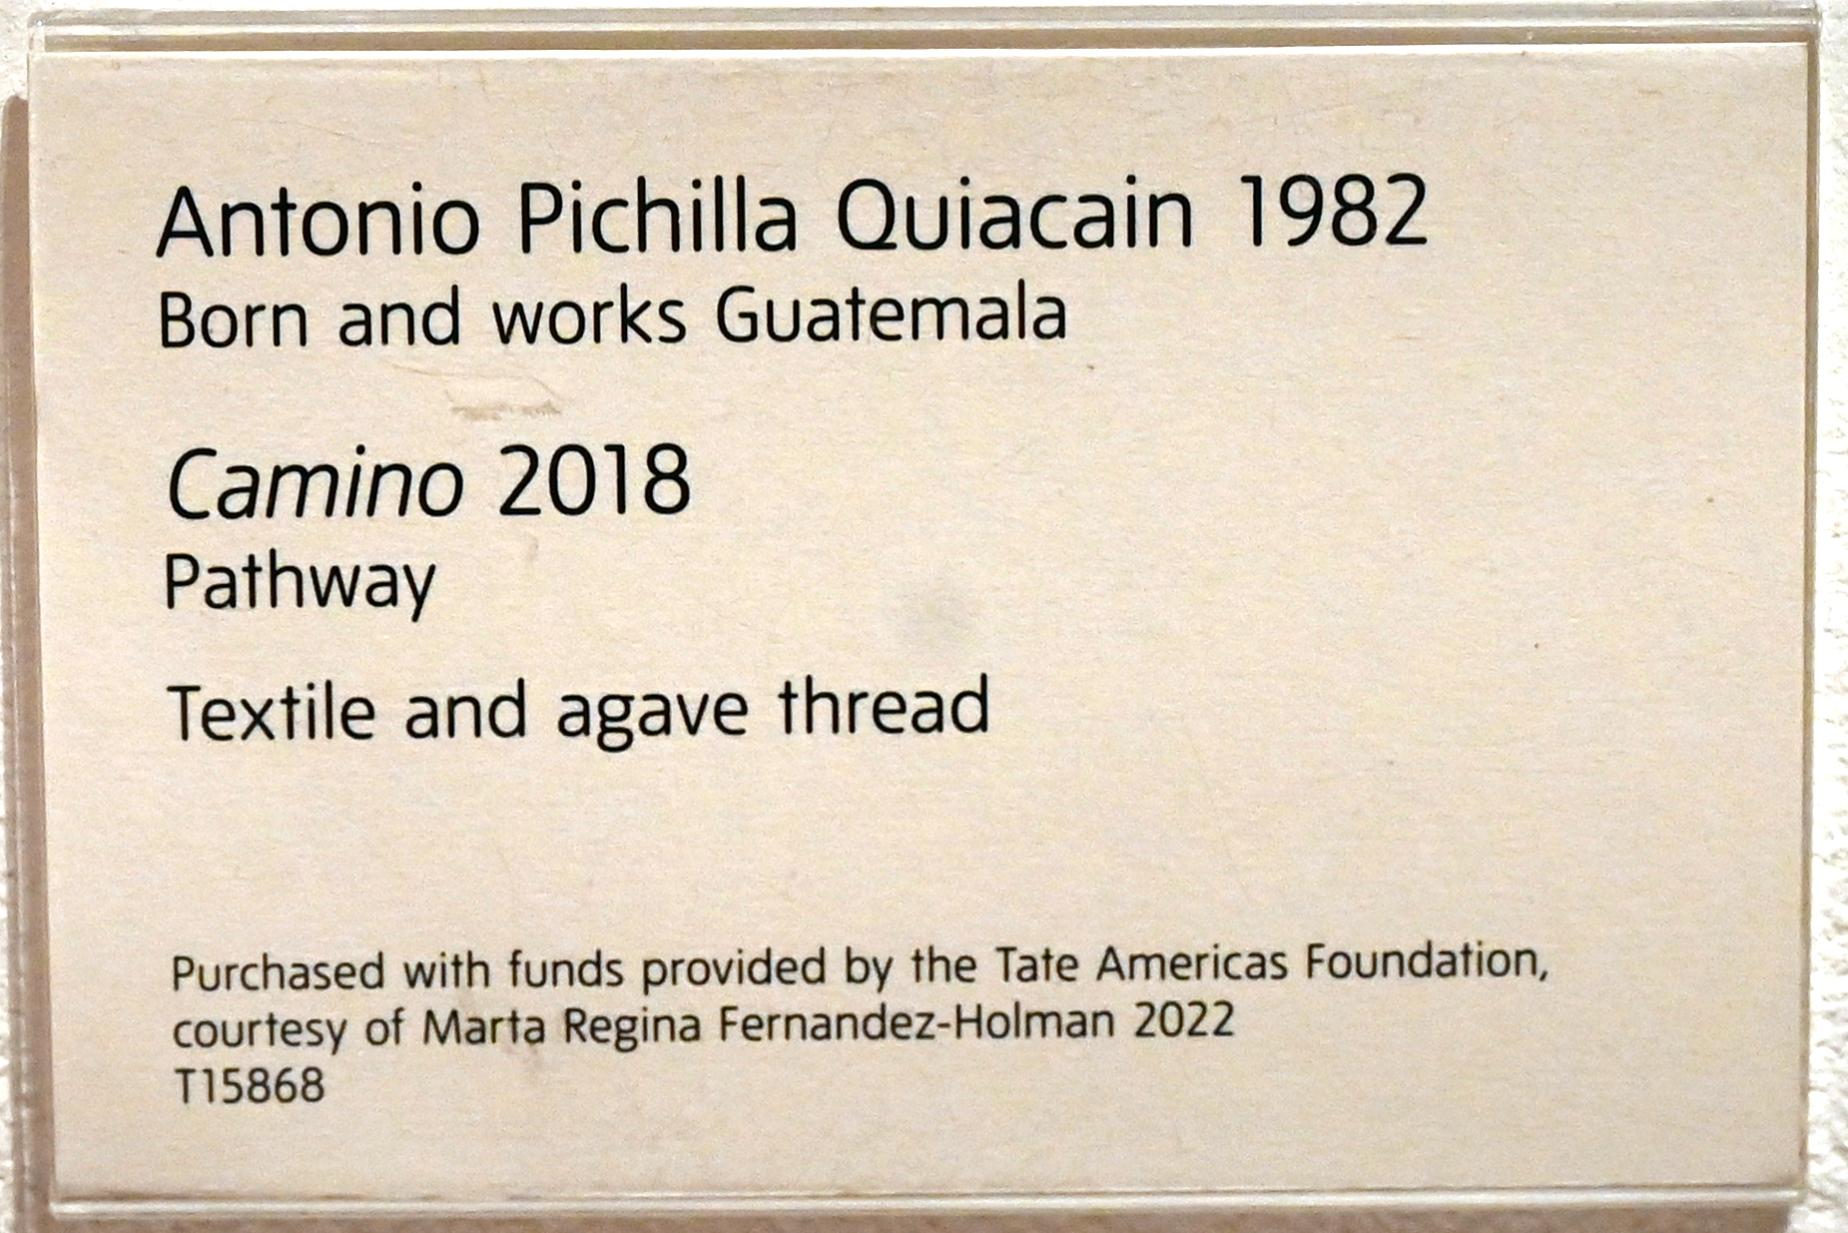 Antonio Pichillá Quiacaín (2017–2018), Weg, London, Tate Gallery of Modern Art (Tate Modern), In the Studio 12, 2018, Bild 2/2